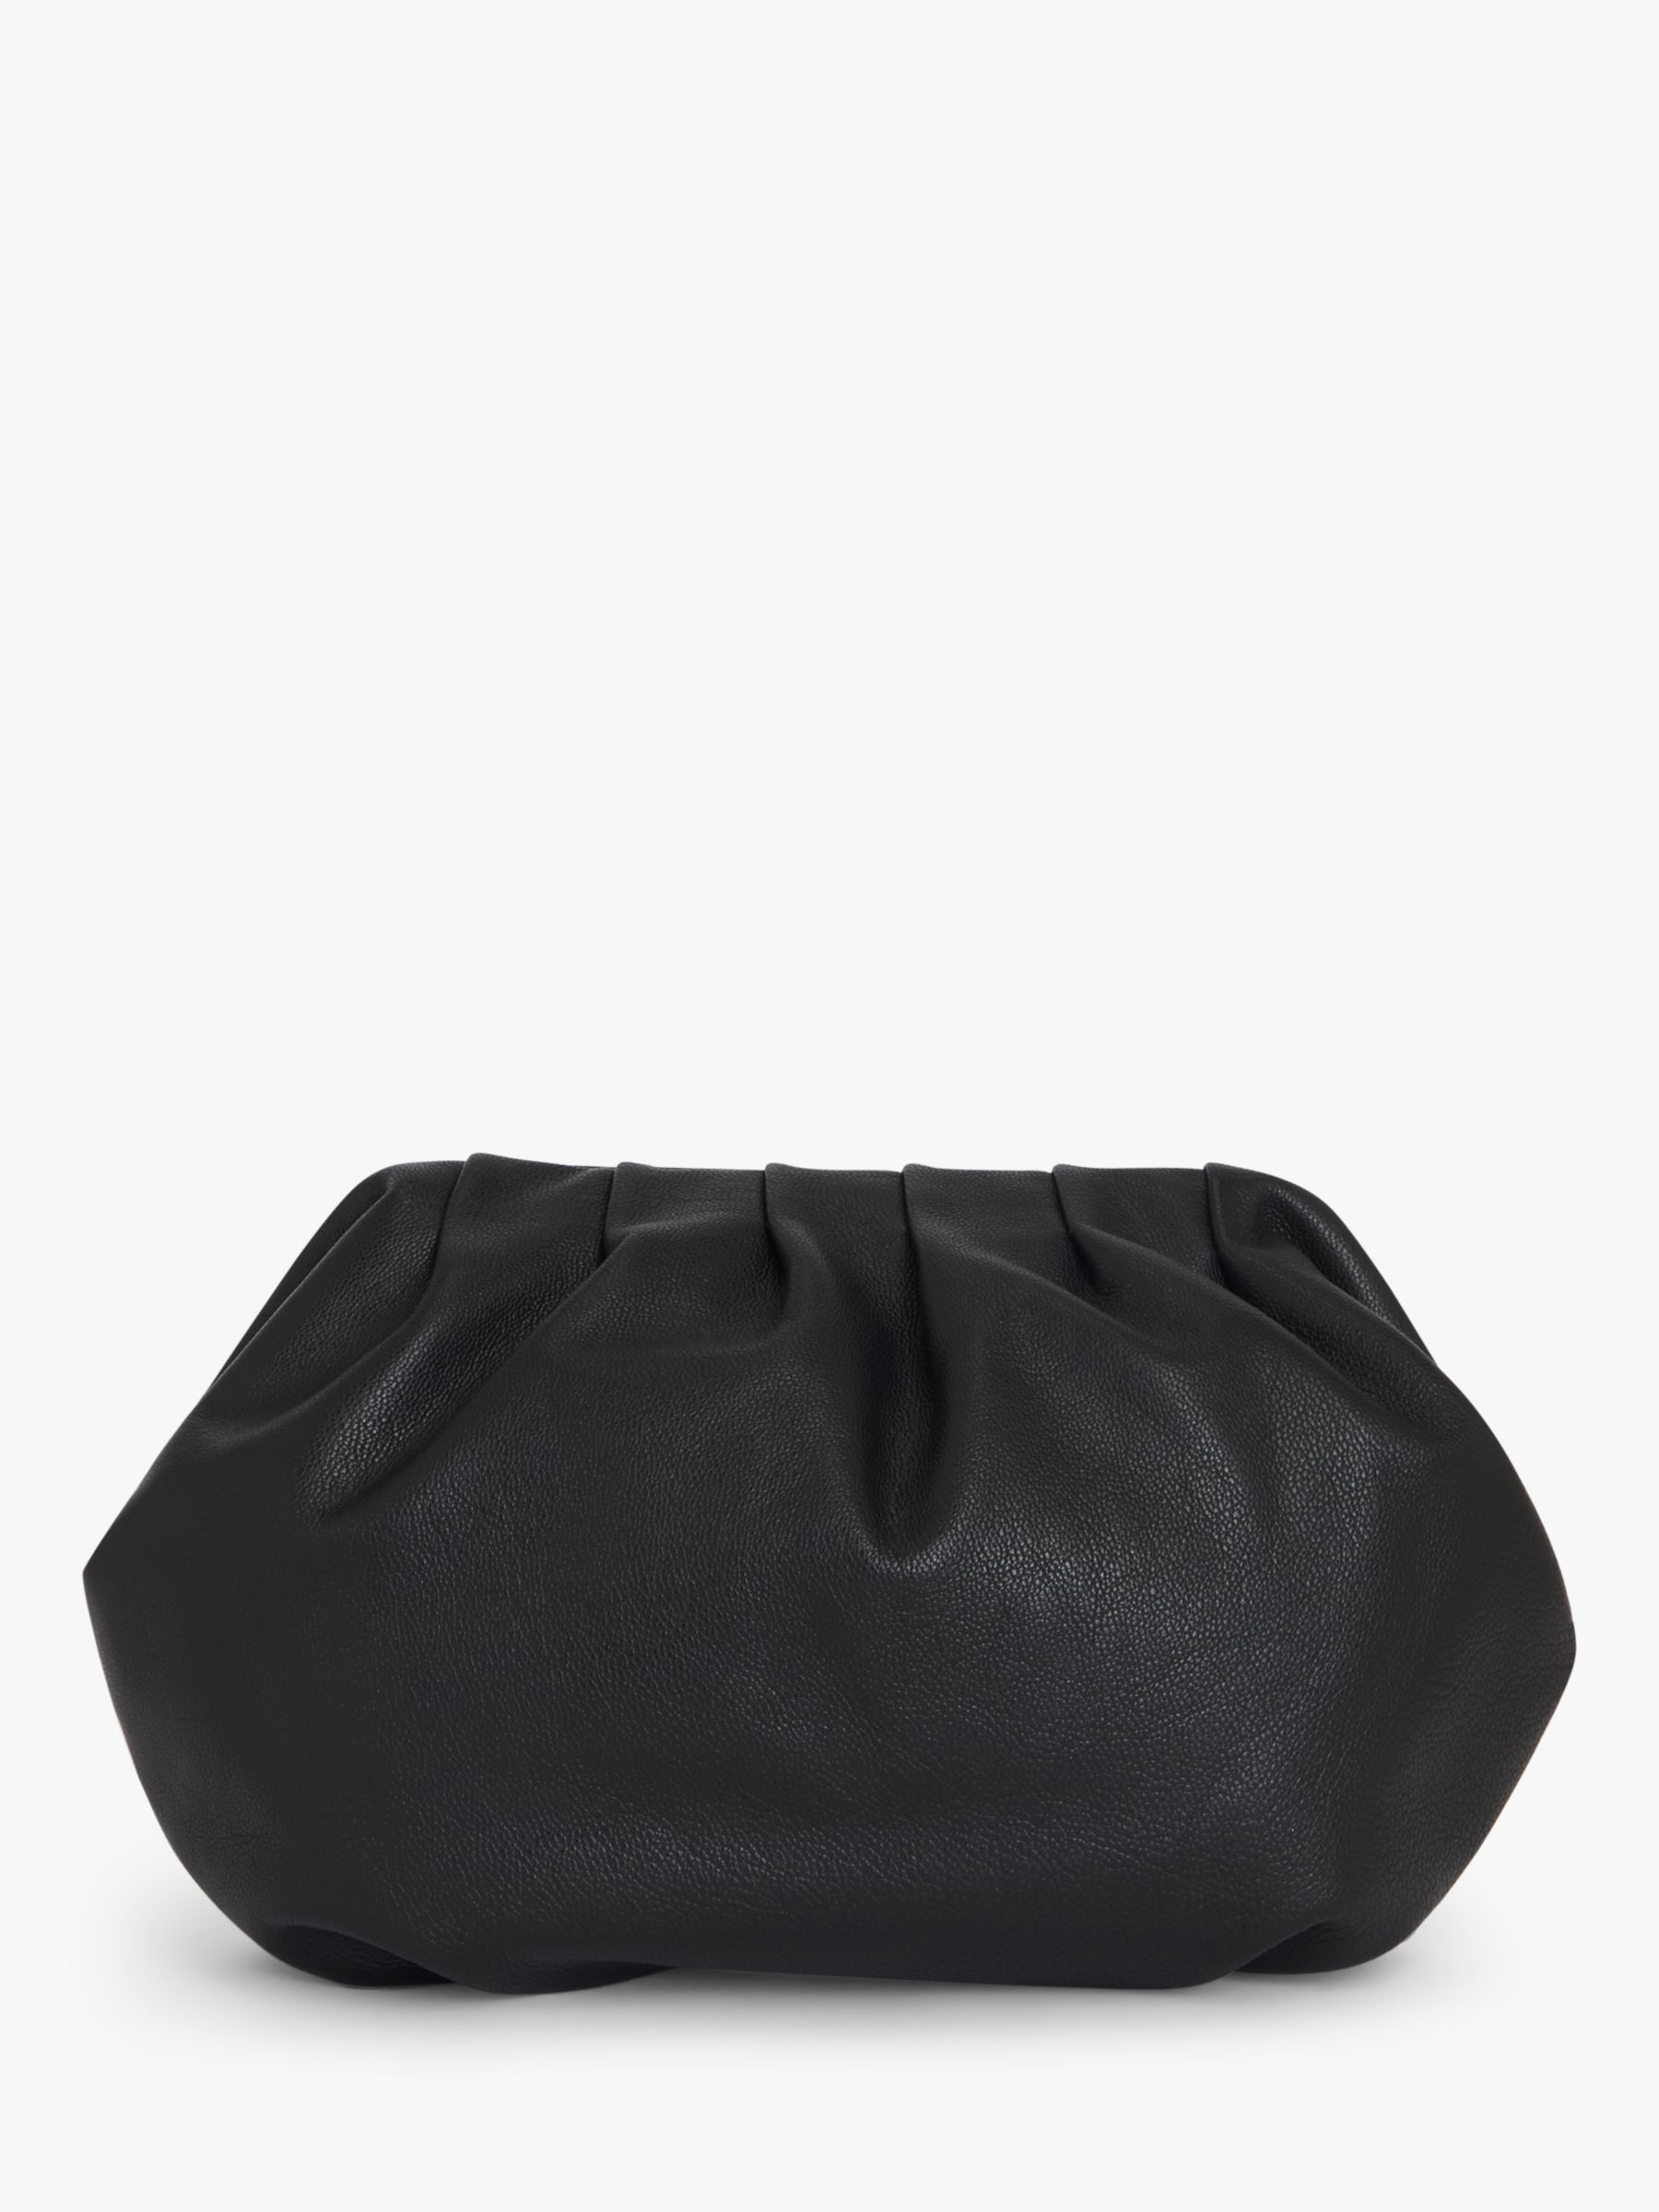 John Lewis Cloud Leather Clutch Bag, Black | John Lewis (UK)